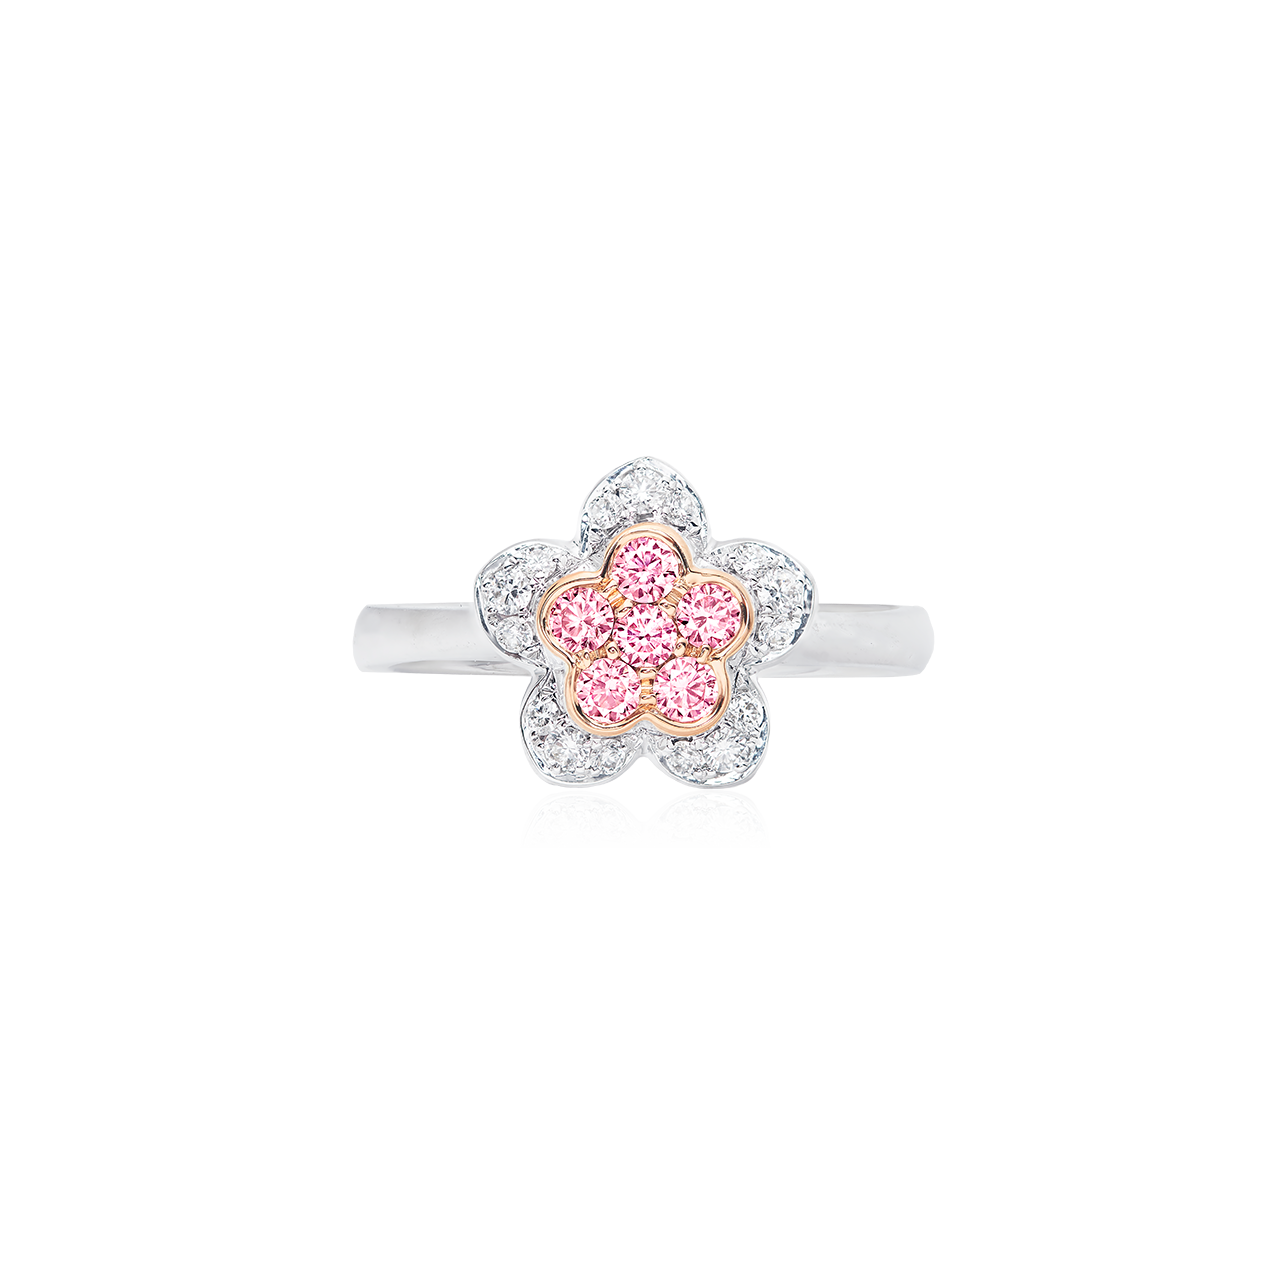 0.22克拉 阿蓋爾鑽戒
Pink Diamond from Argyle Mine and Diamond Ring